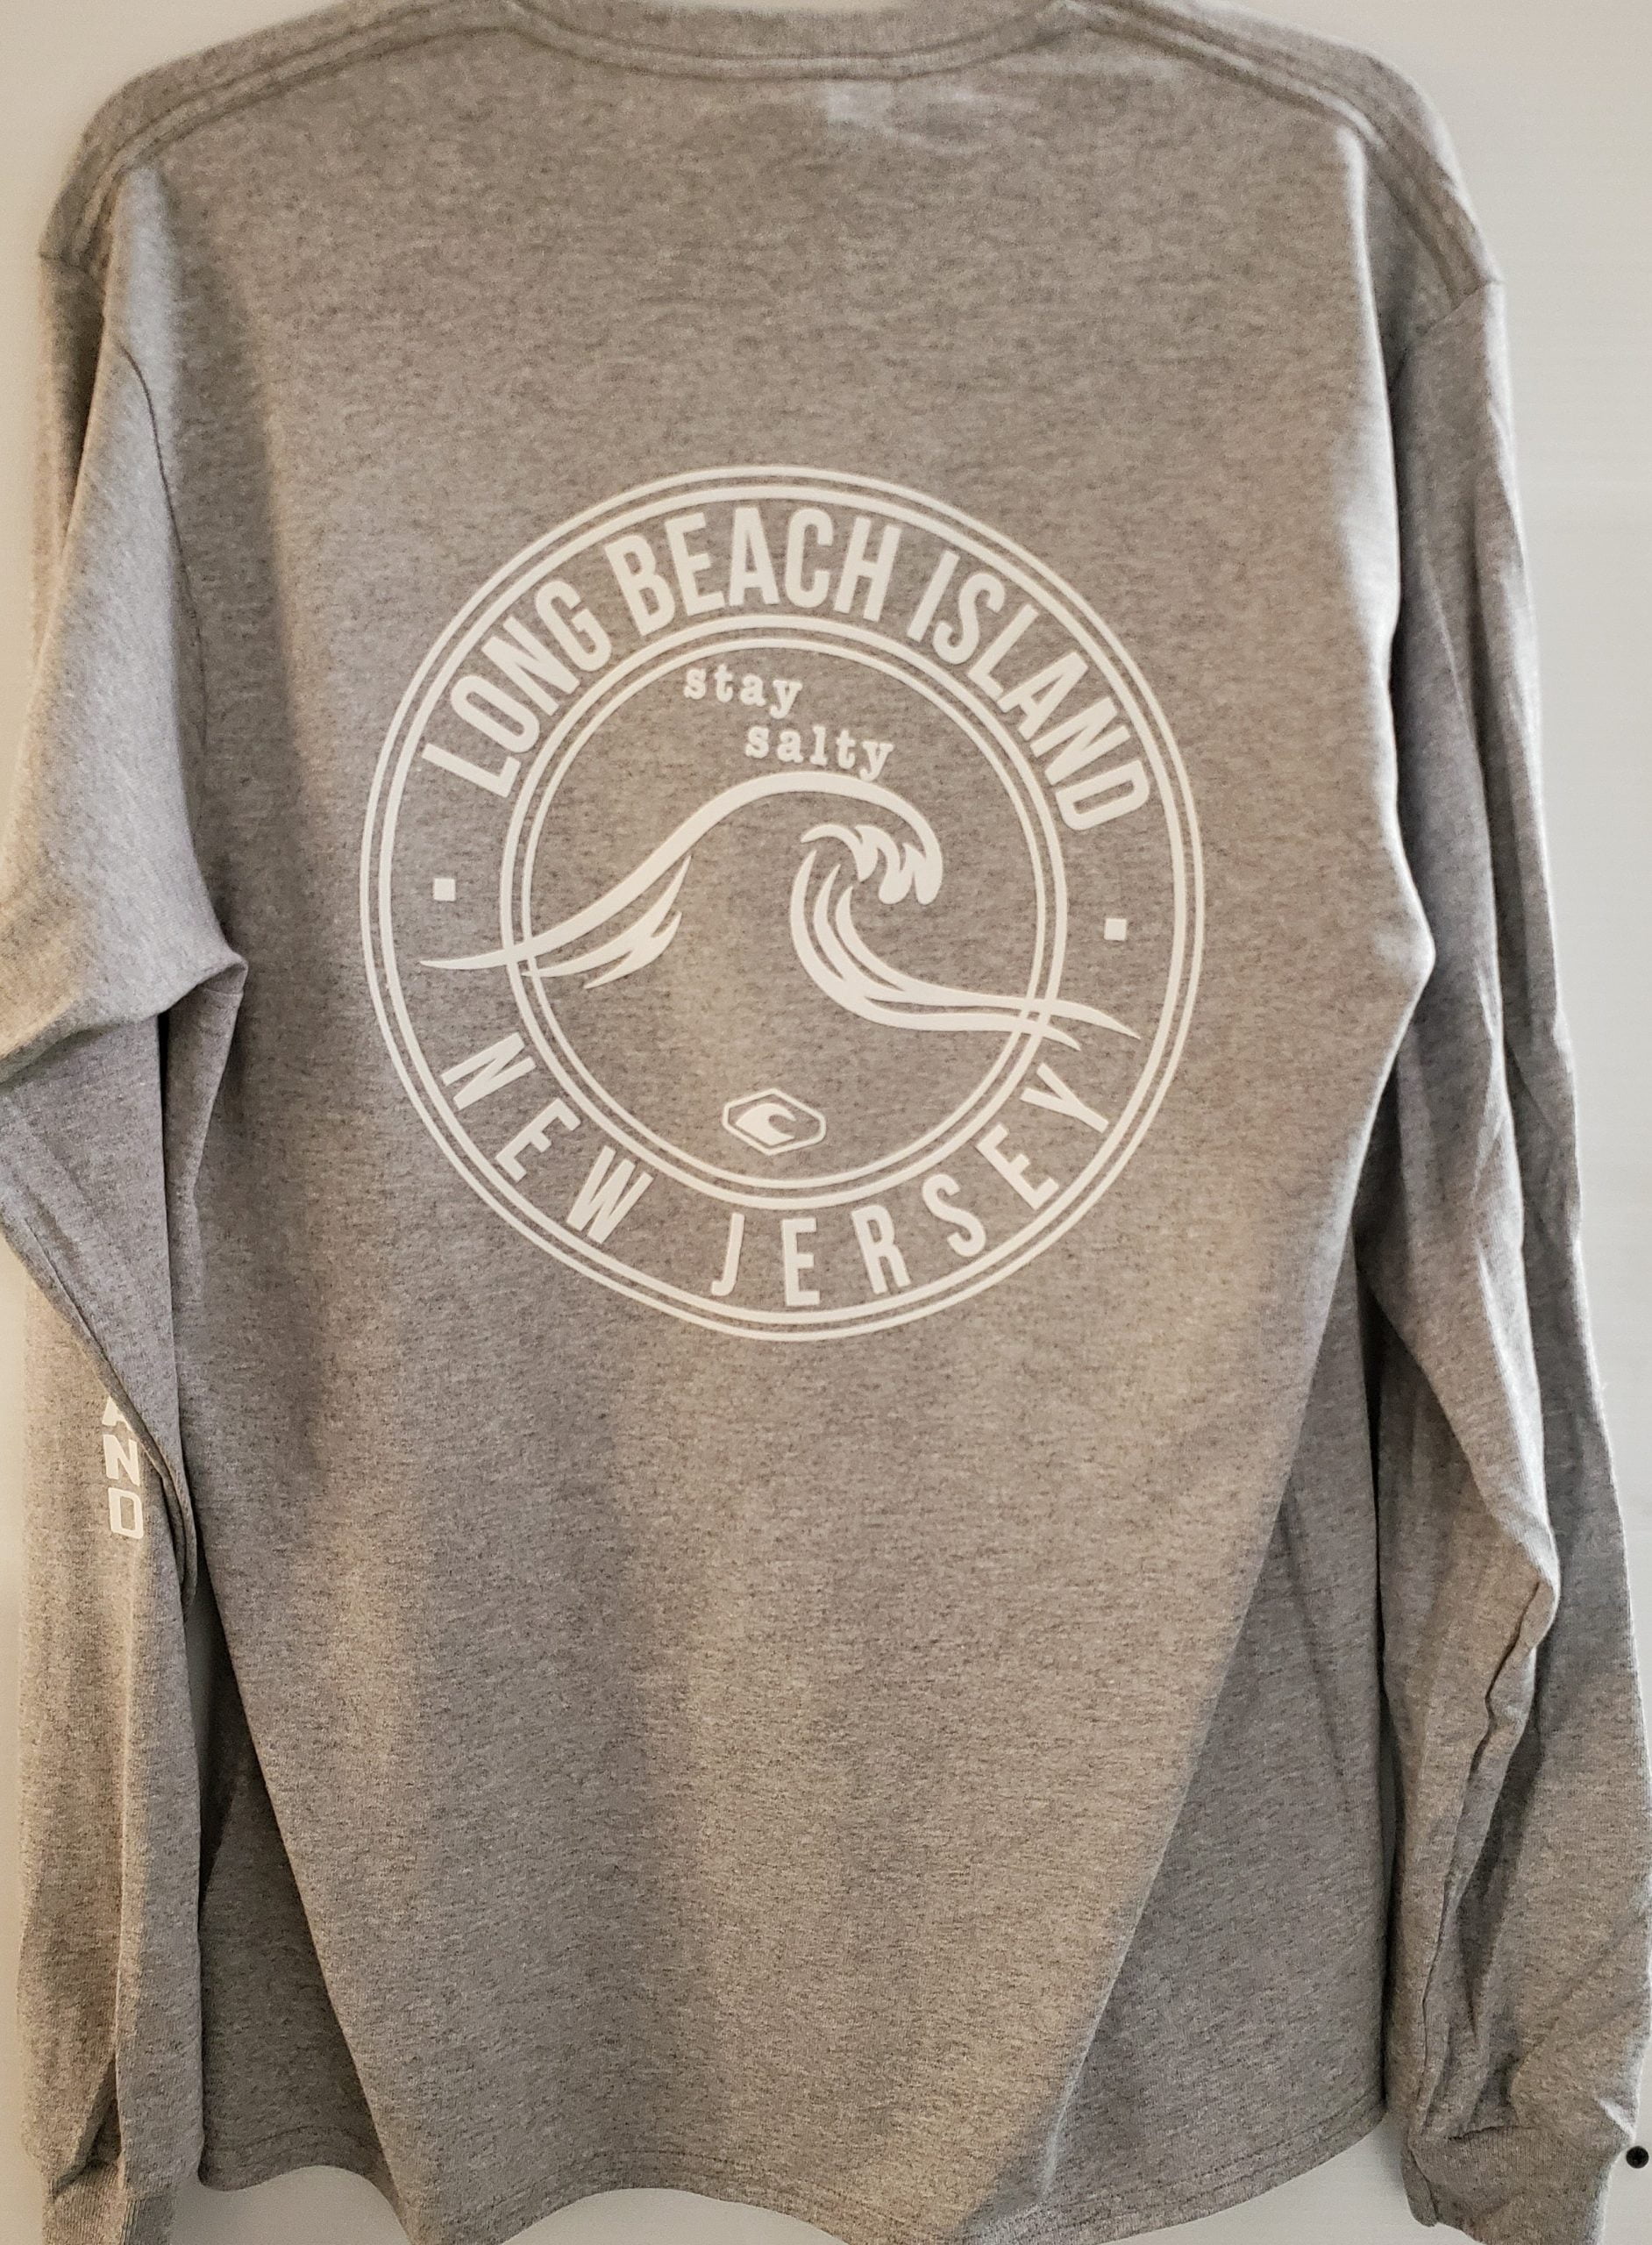 LBI Long Sleeve Tee Shirt, Wave, Heather Gray, Long Beach Island ...